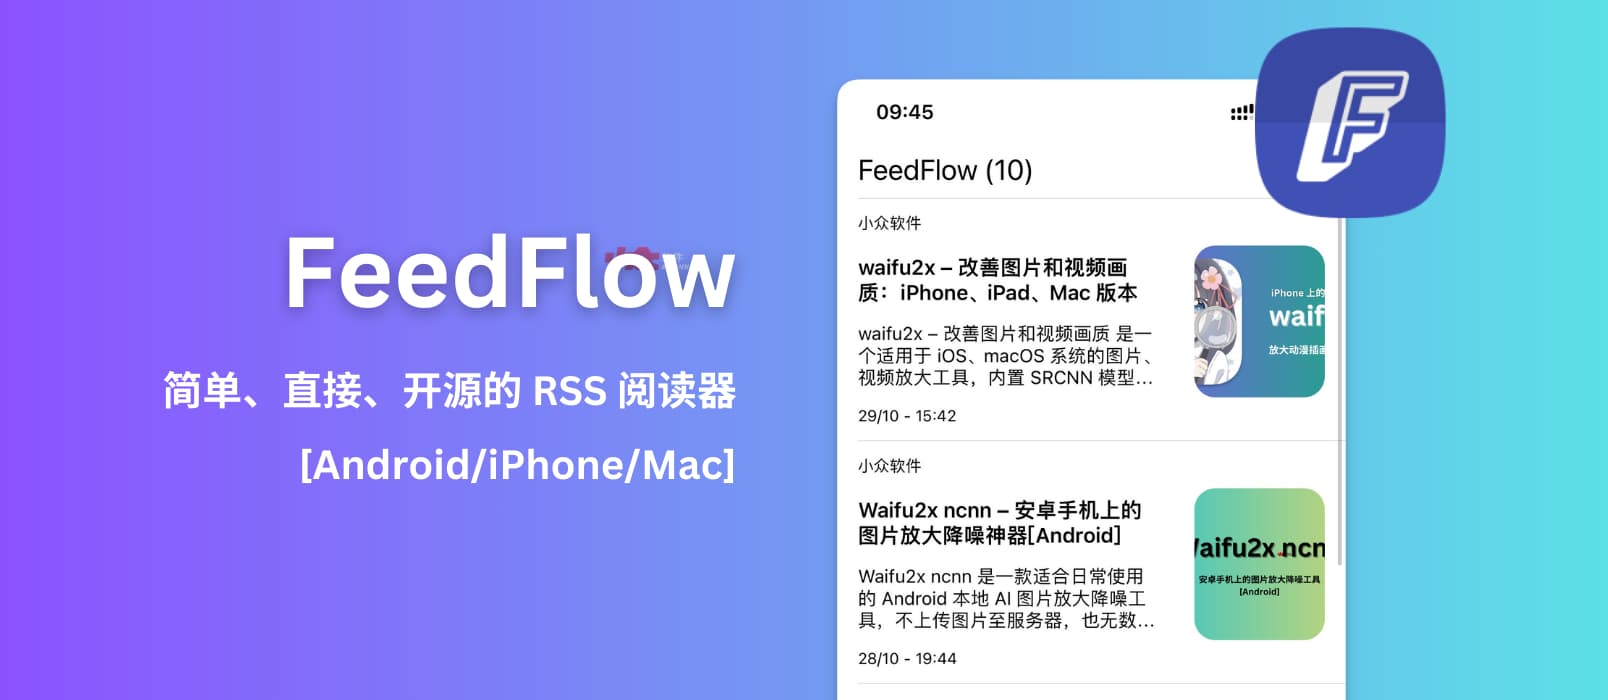 FeedFlow - 一个简单、直接、免费、开源的 RSS 阅读器[Android/iPhone/Mac]